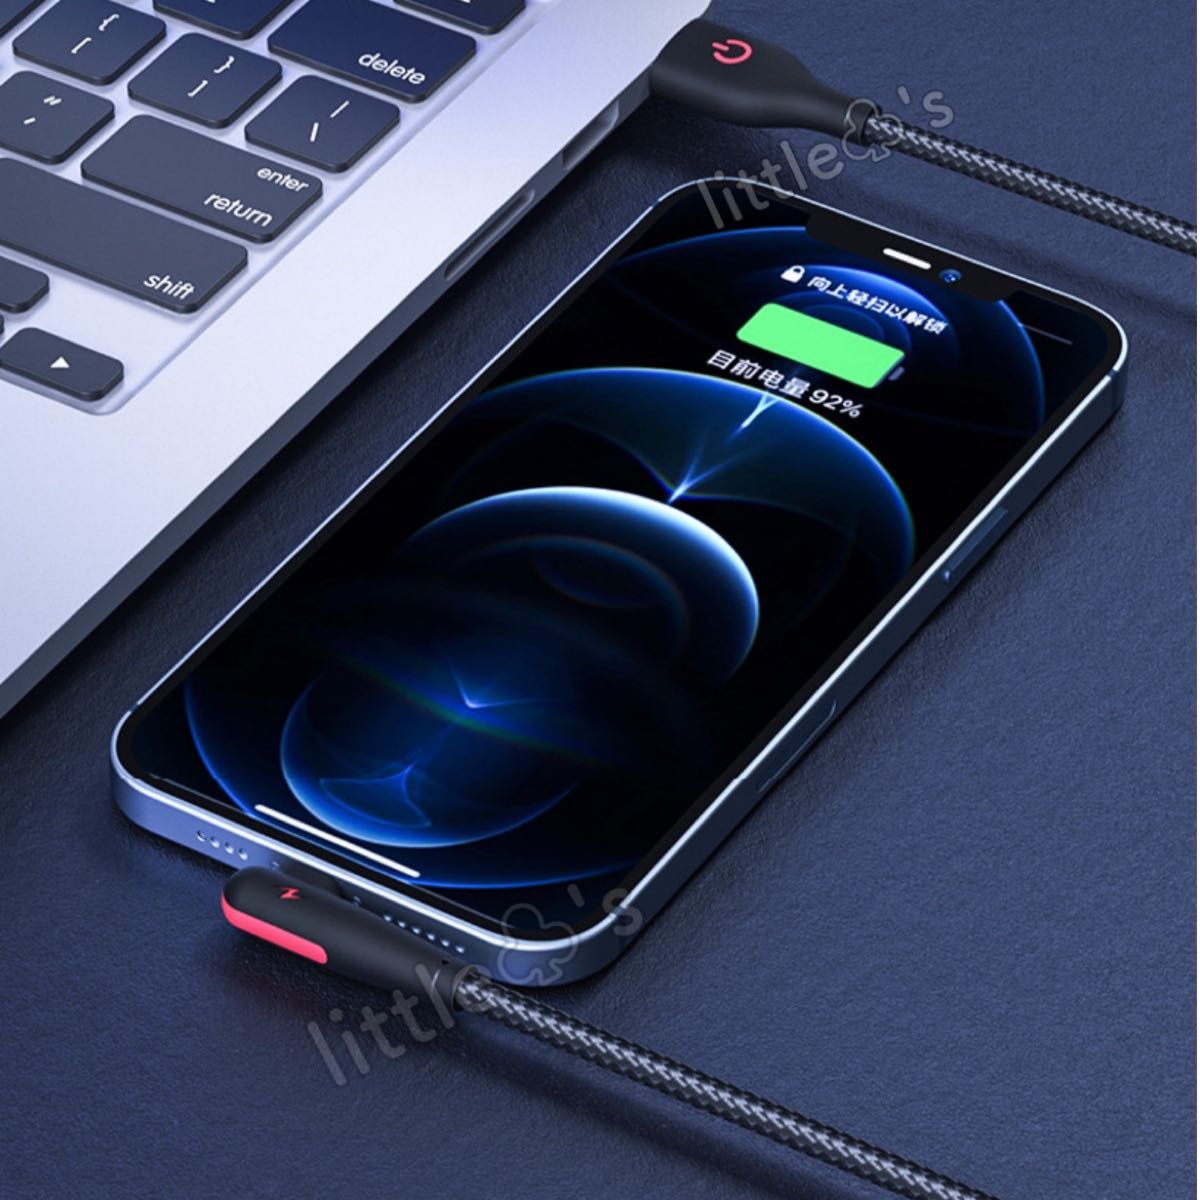 ★iPhone ライトニング ケーブル カラフル iPhone充電器 ケーブル 急速充電 L型 2.4A 2m 2本 2色セット